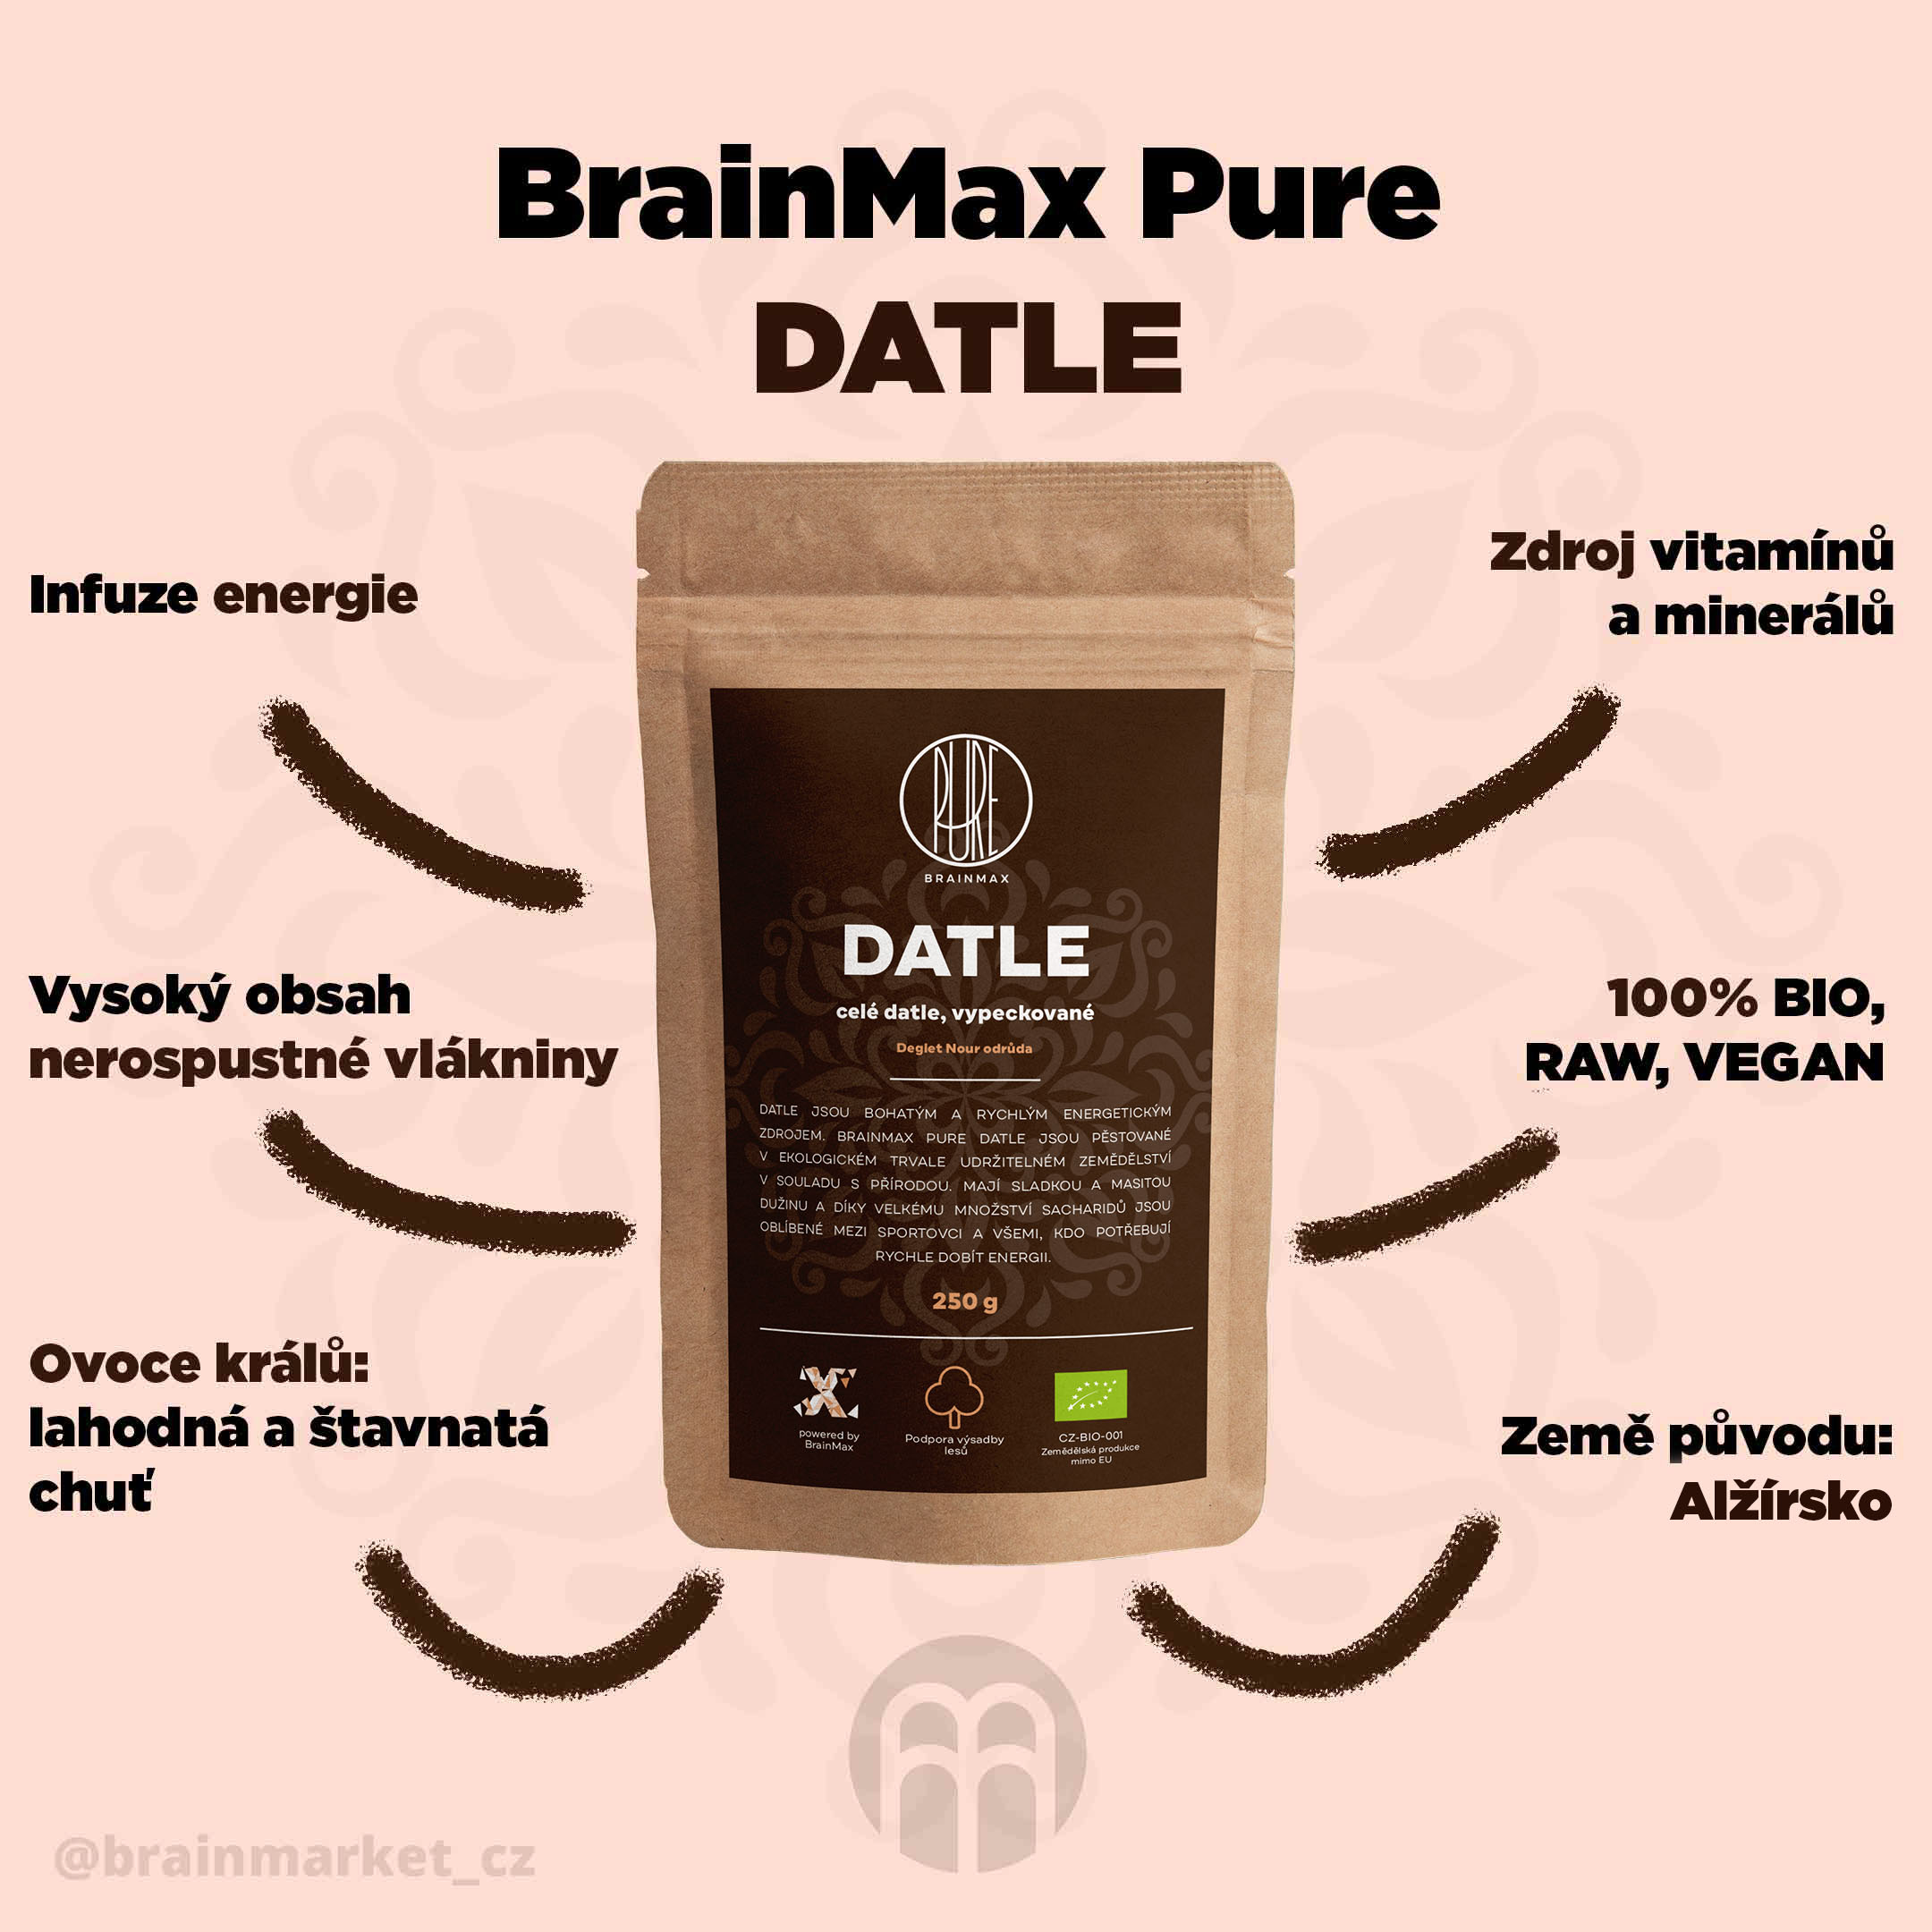 BrainMax Pure Datle - BrainMarket.cz